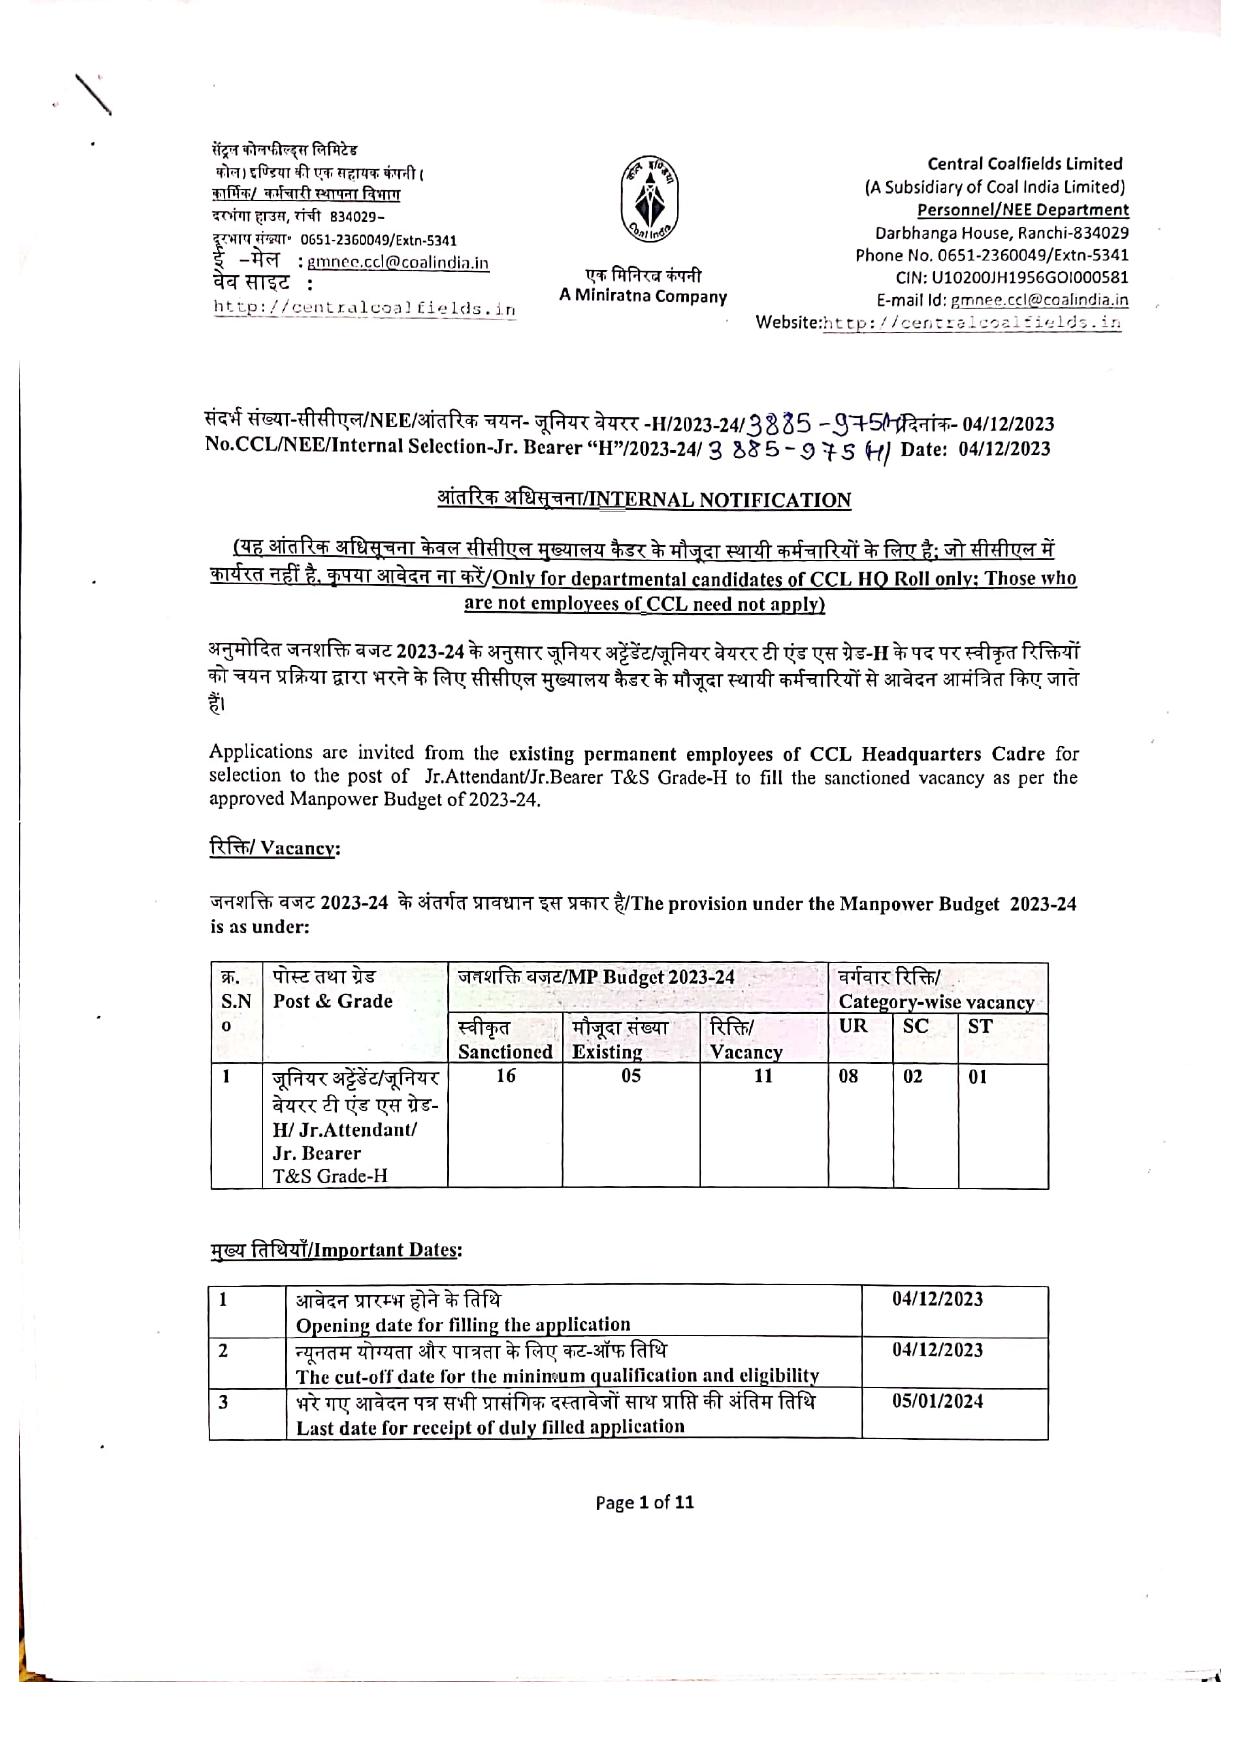 Central Coalfields Limited (CCL) Junior Attendant / Junior Bearer Recruitment 2023 - Page 1